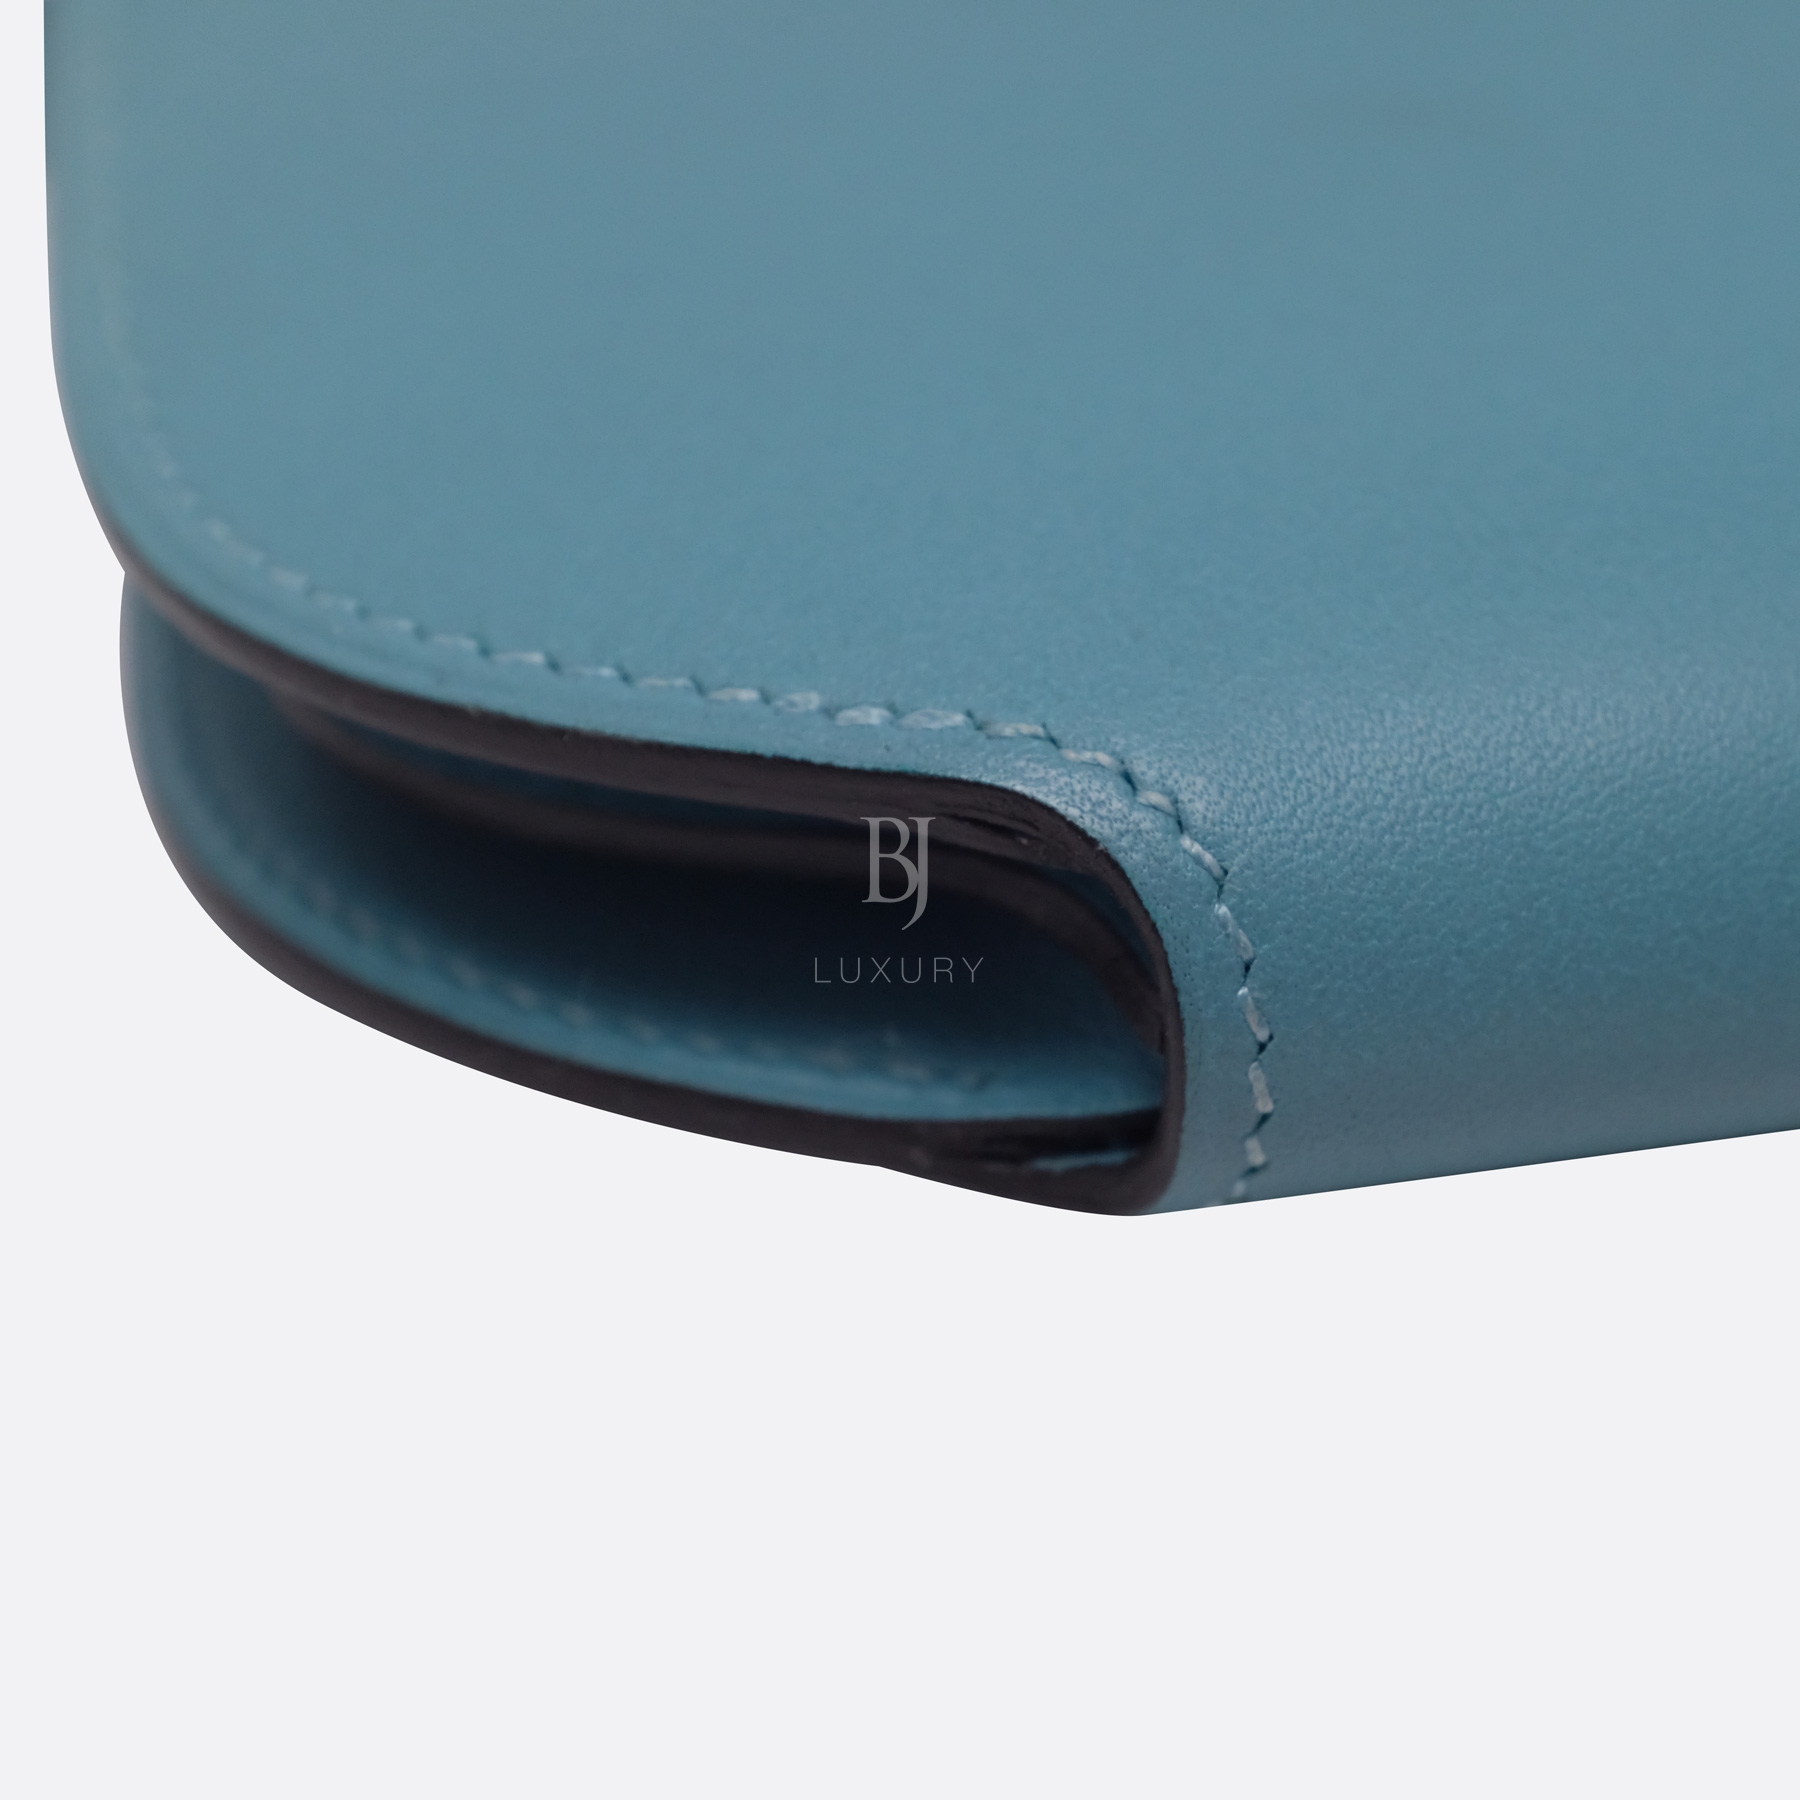 Hermes Conveyor Bag 16 Turquoise Swift Lizard Palladium BJ Luxury 10.jpg